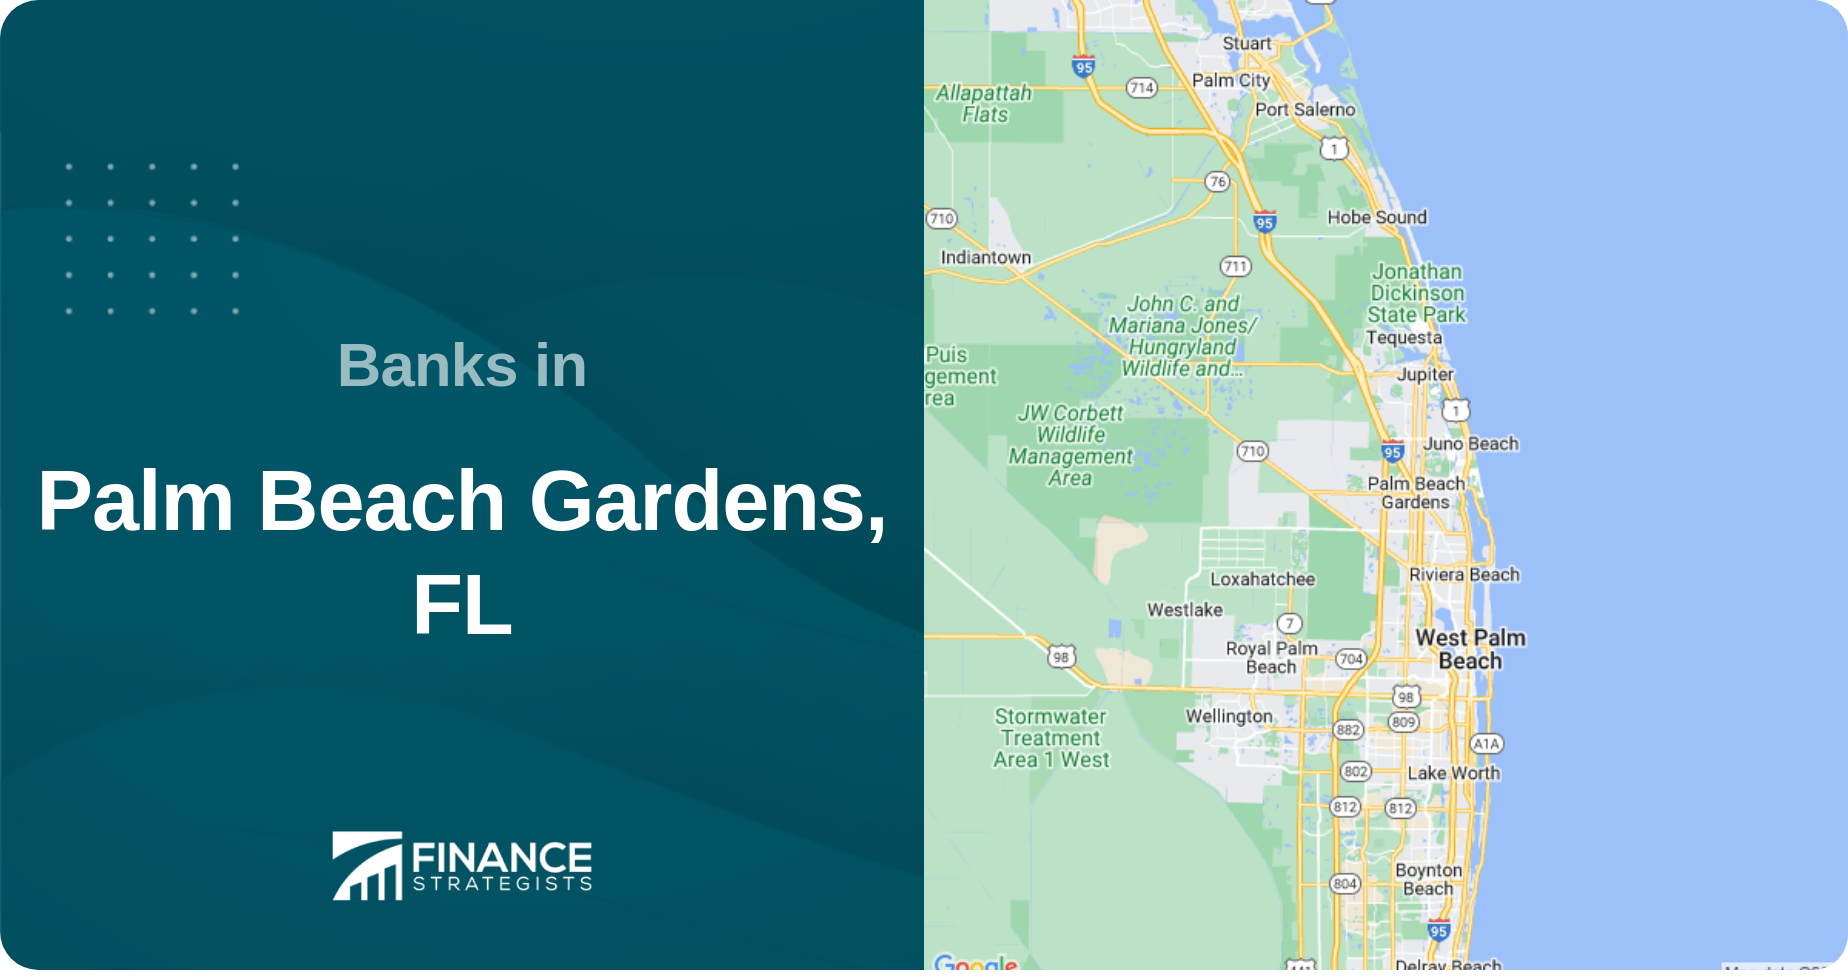 Banks in Palm Beach Gardens, FL